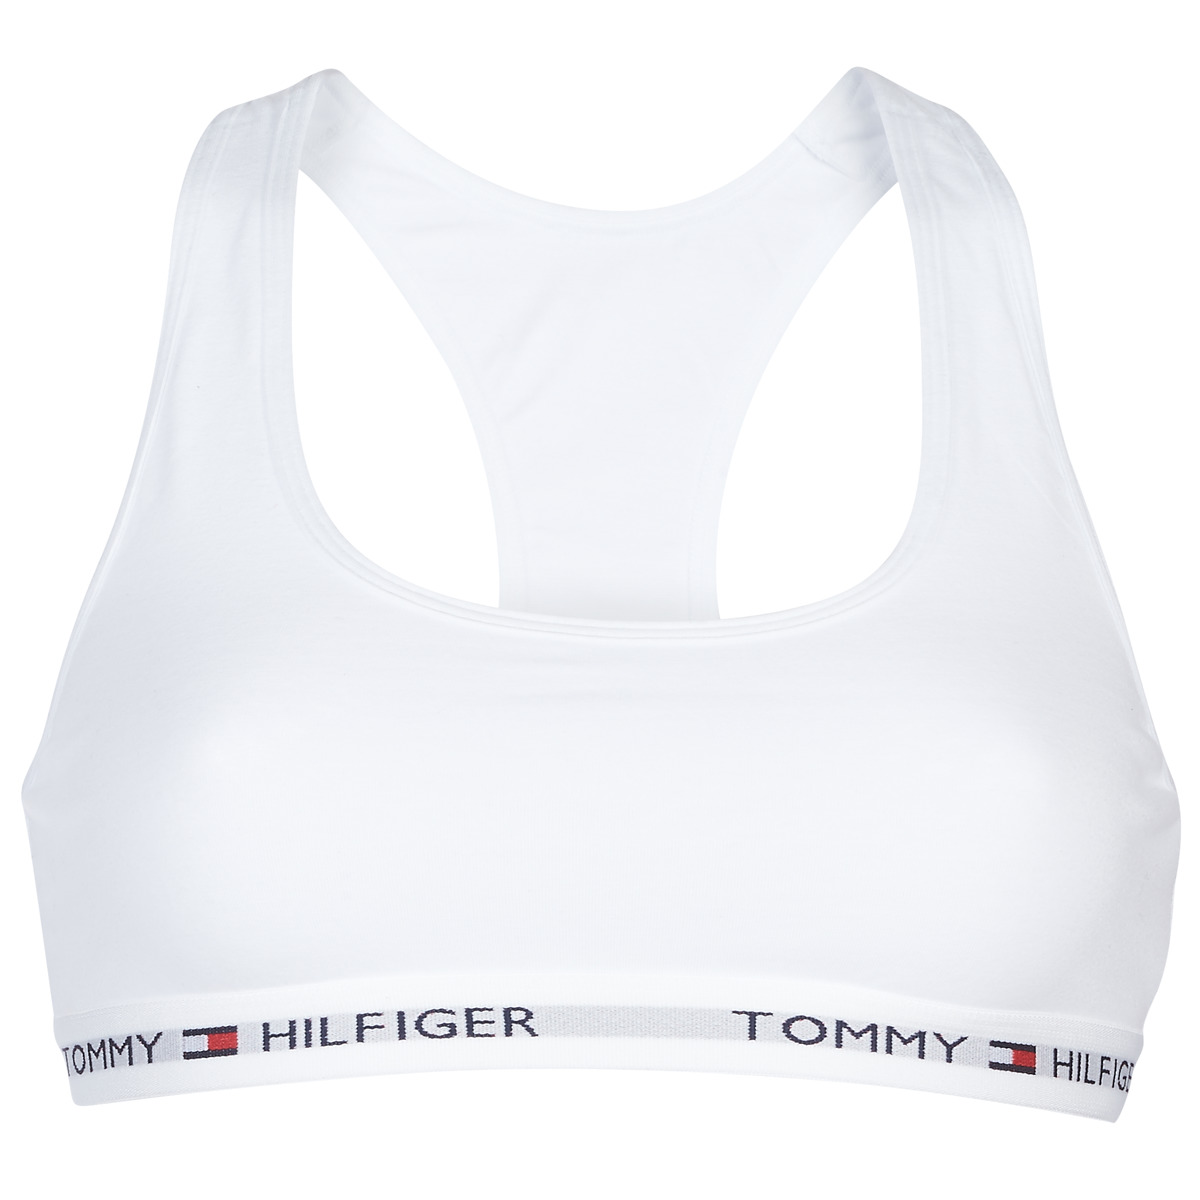 Tommy Hilfiger logo bralette set in white